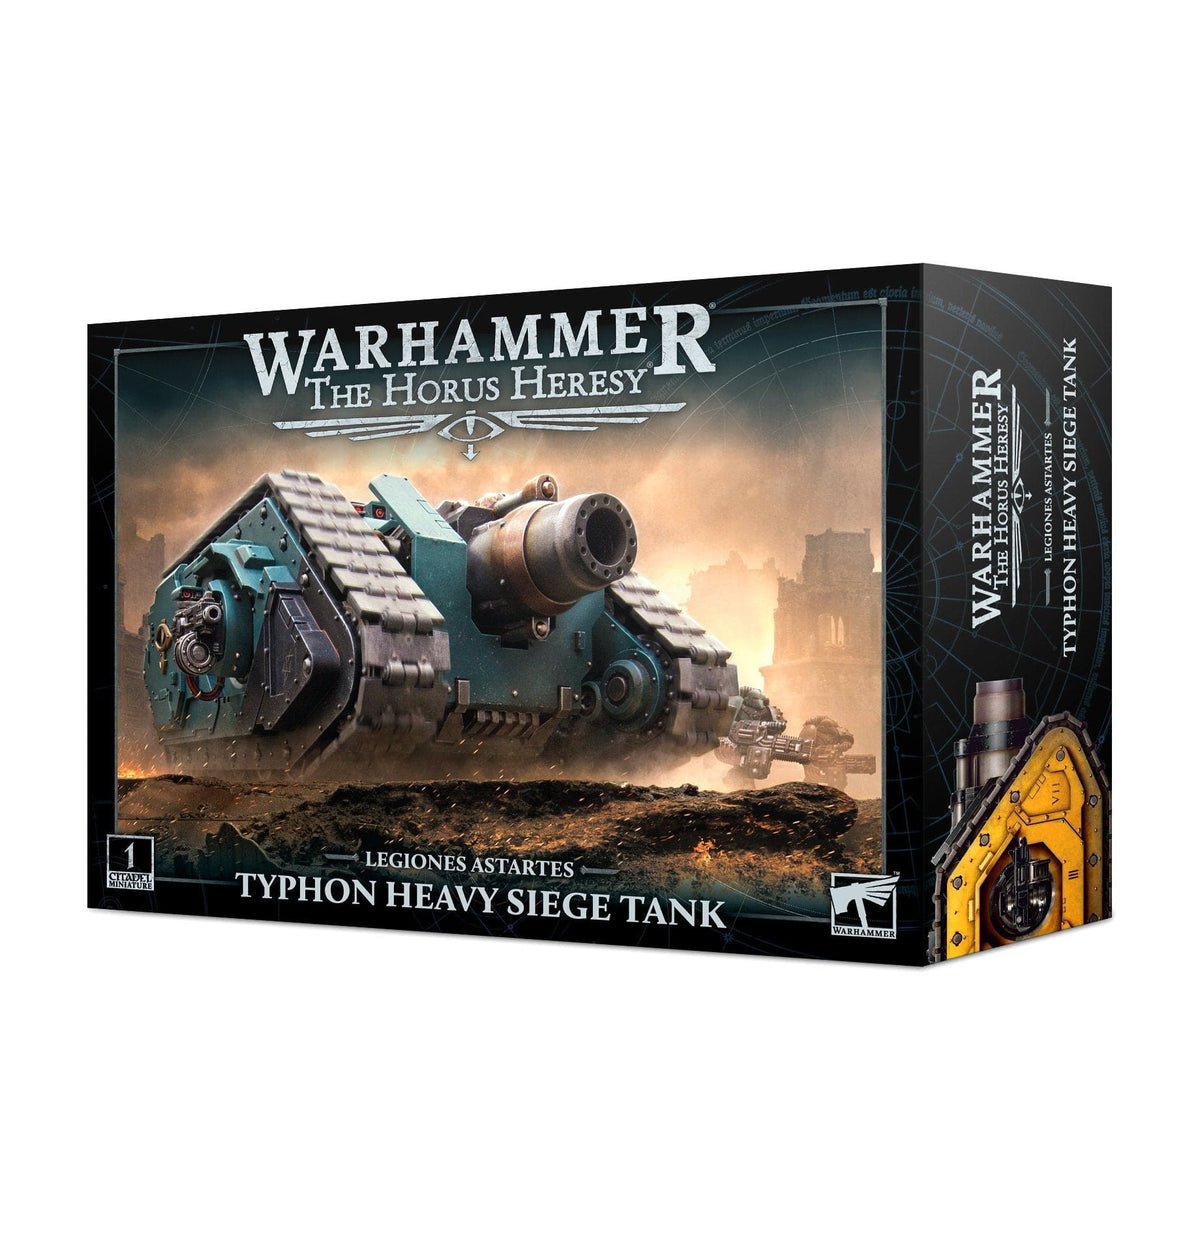 Warhammer - Horus Heresy: Legion Astartes - Typhon Heavy Siege Tank